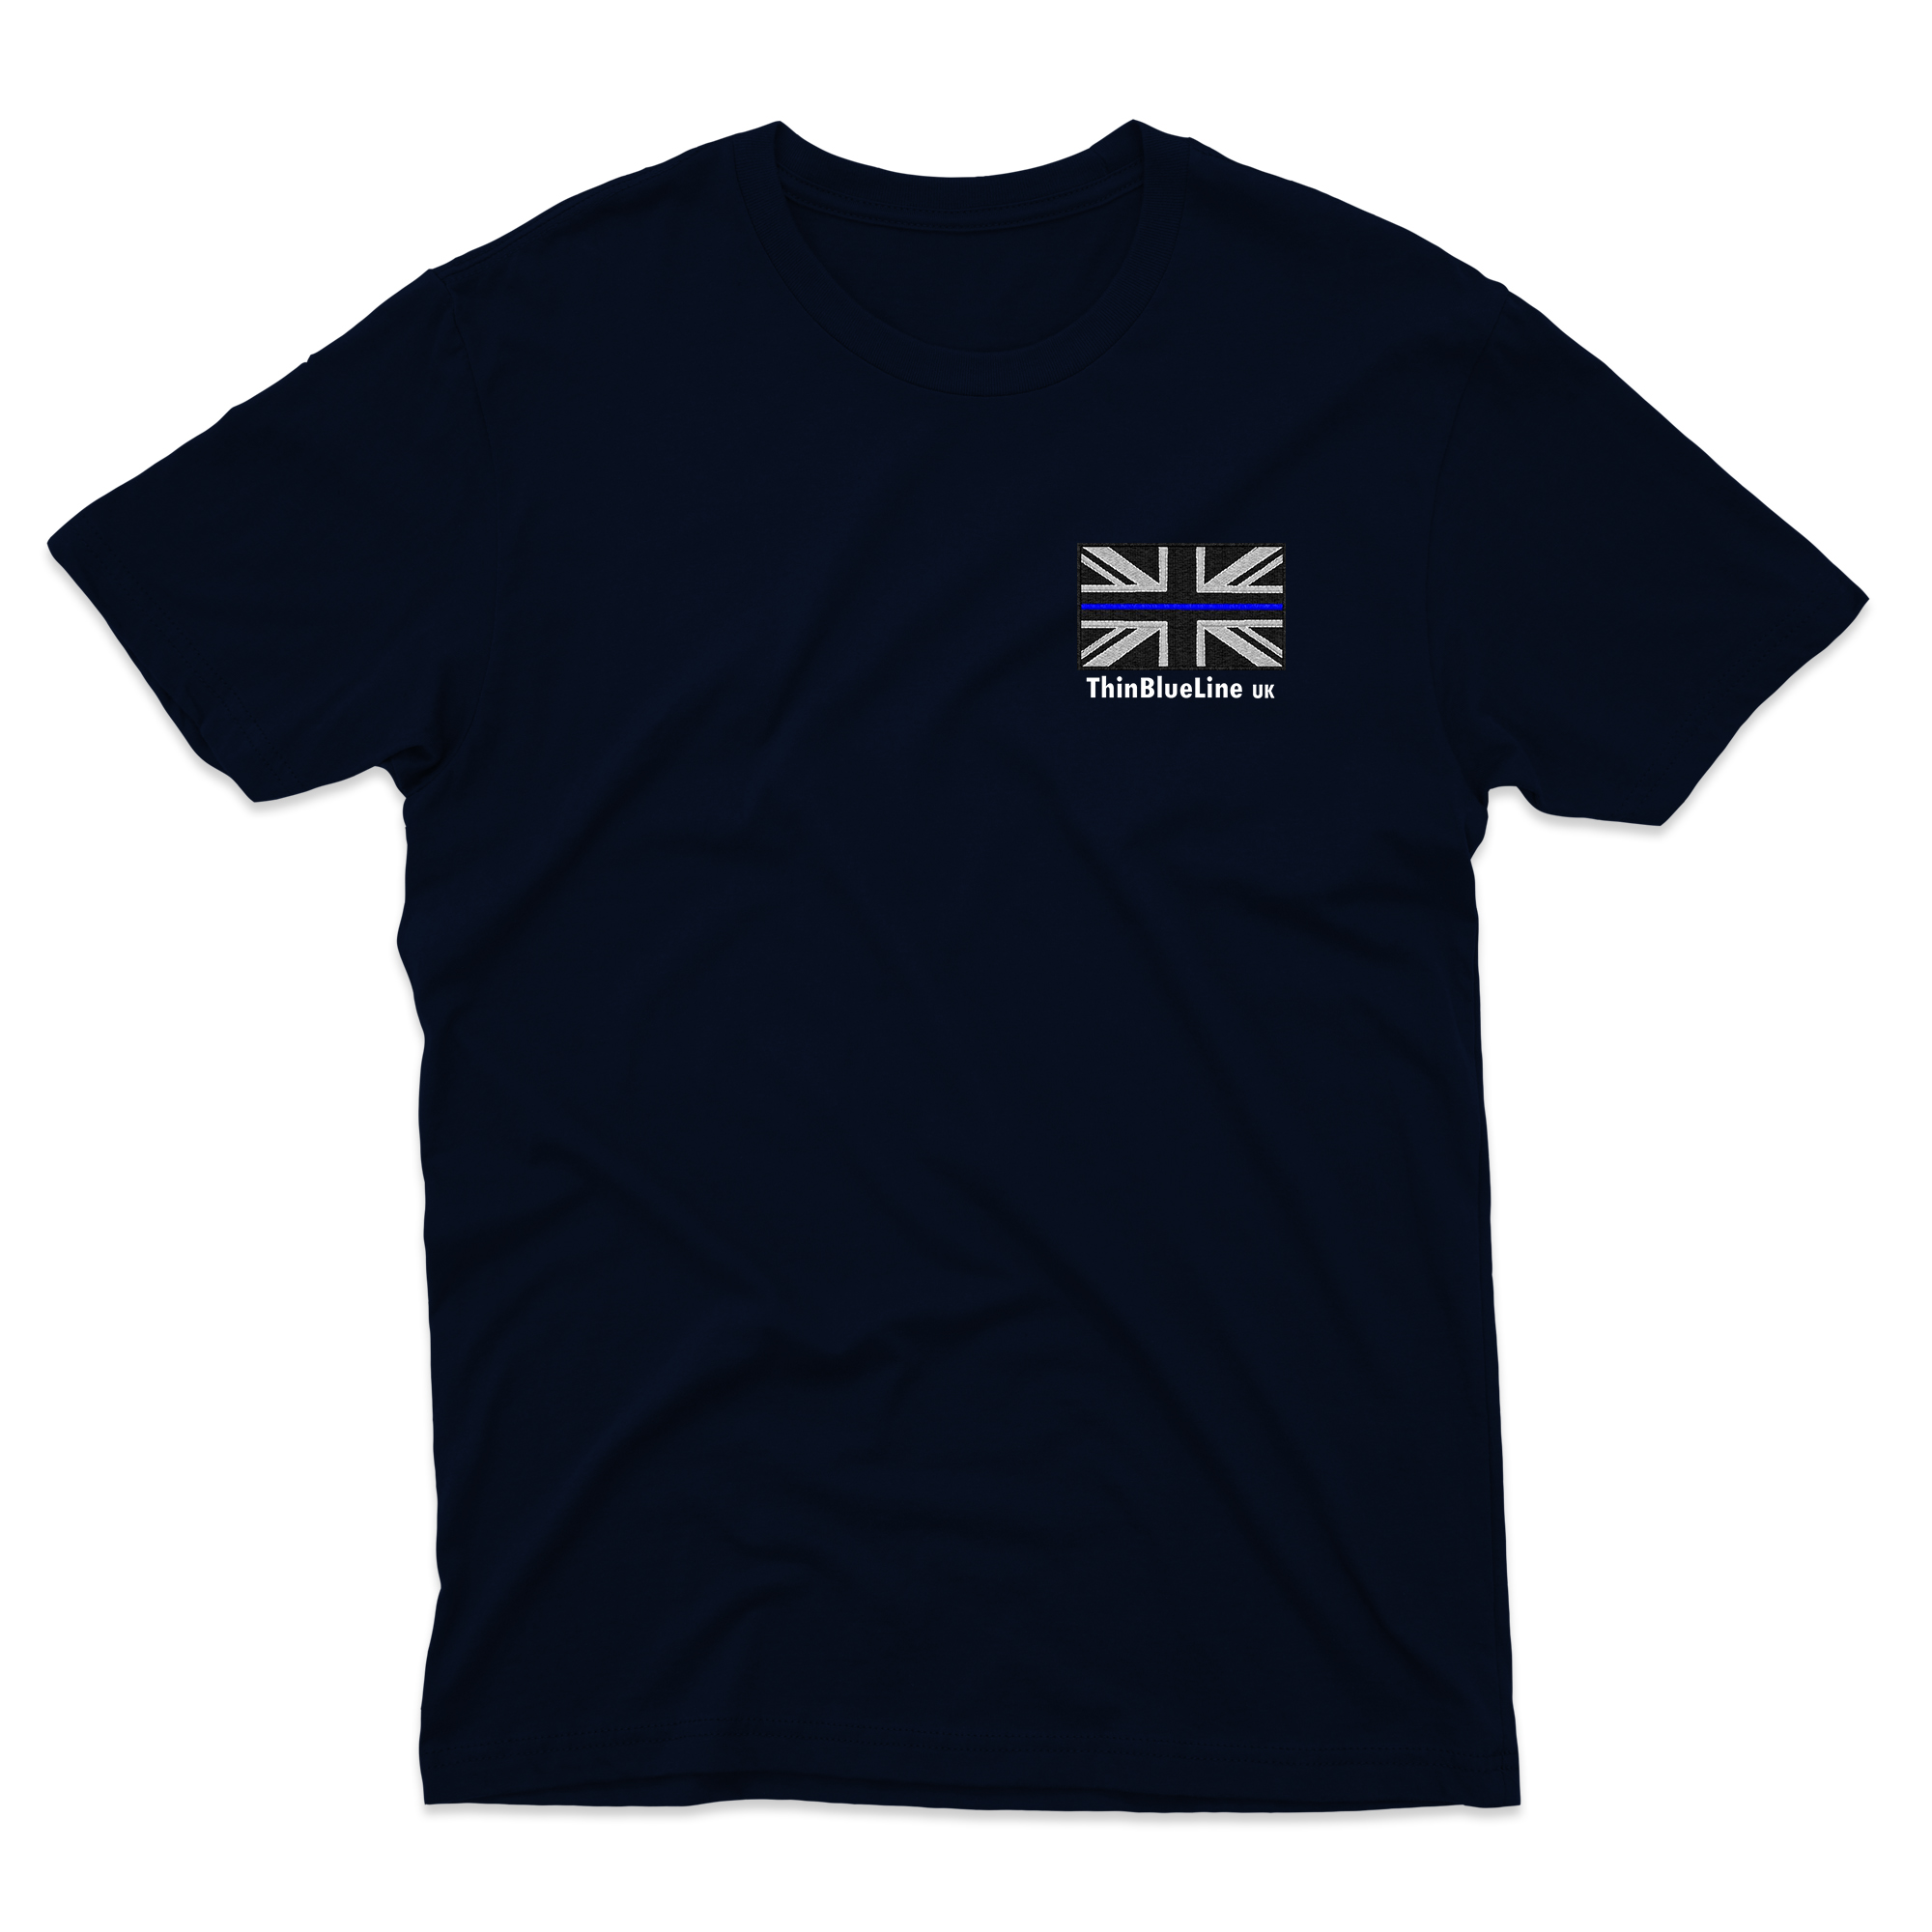 Thin Blue Line T-Shirt - Blue Line Union Flag with Text - Thin Blue Line UK